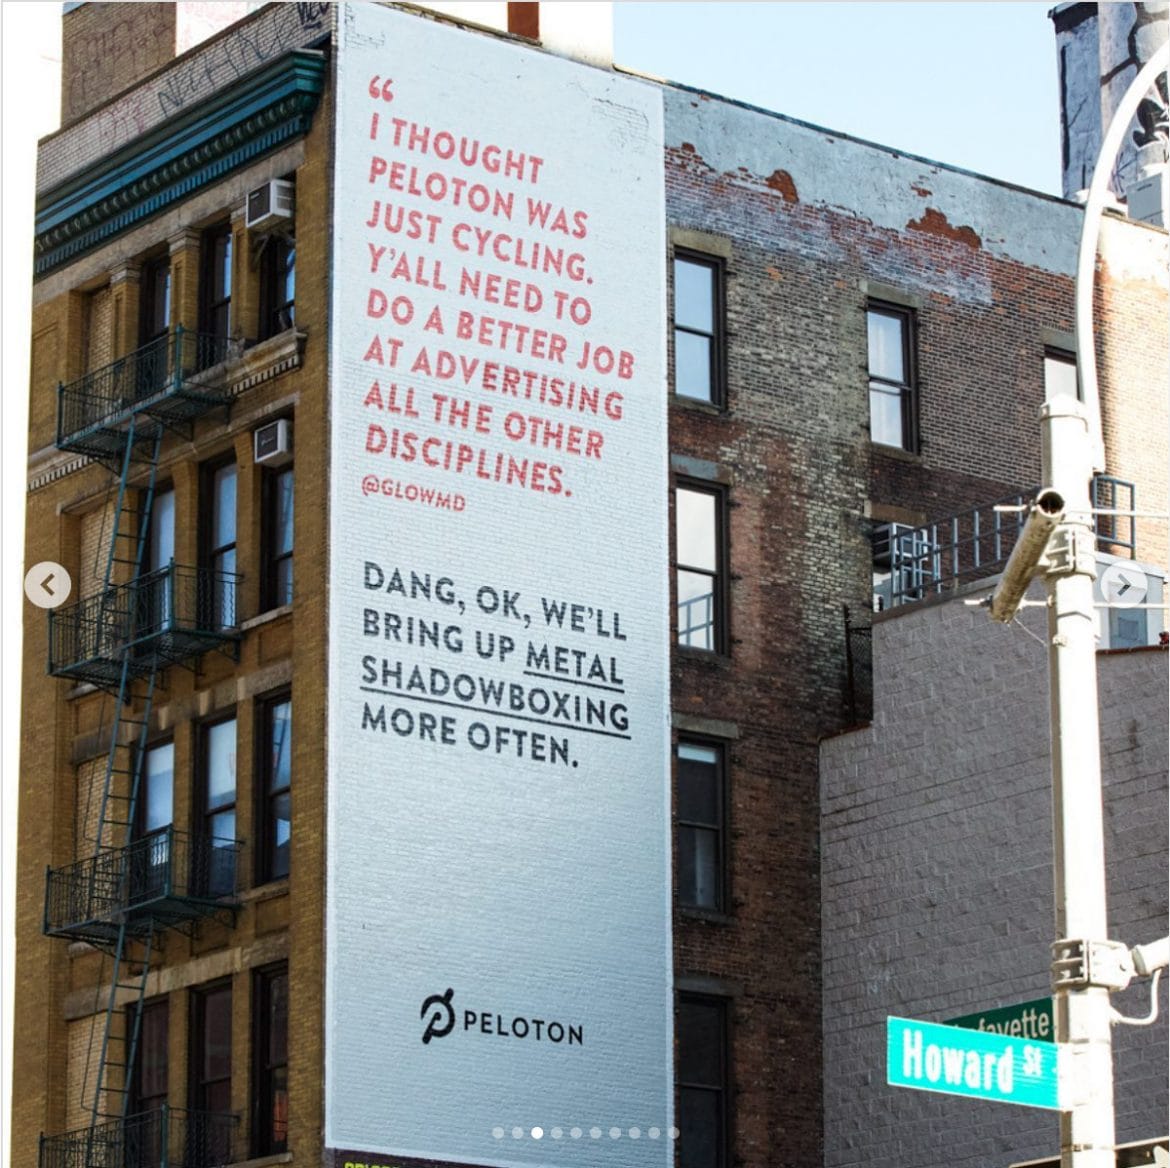 Peloton advertisement in New York City. Image credit Peloton social media.